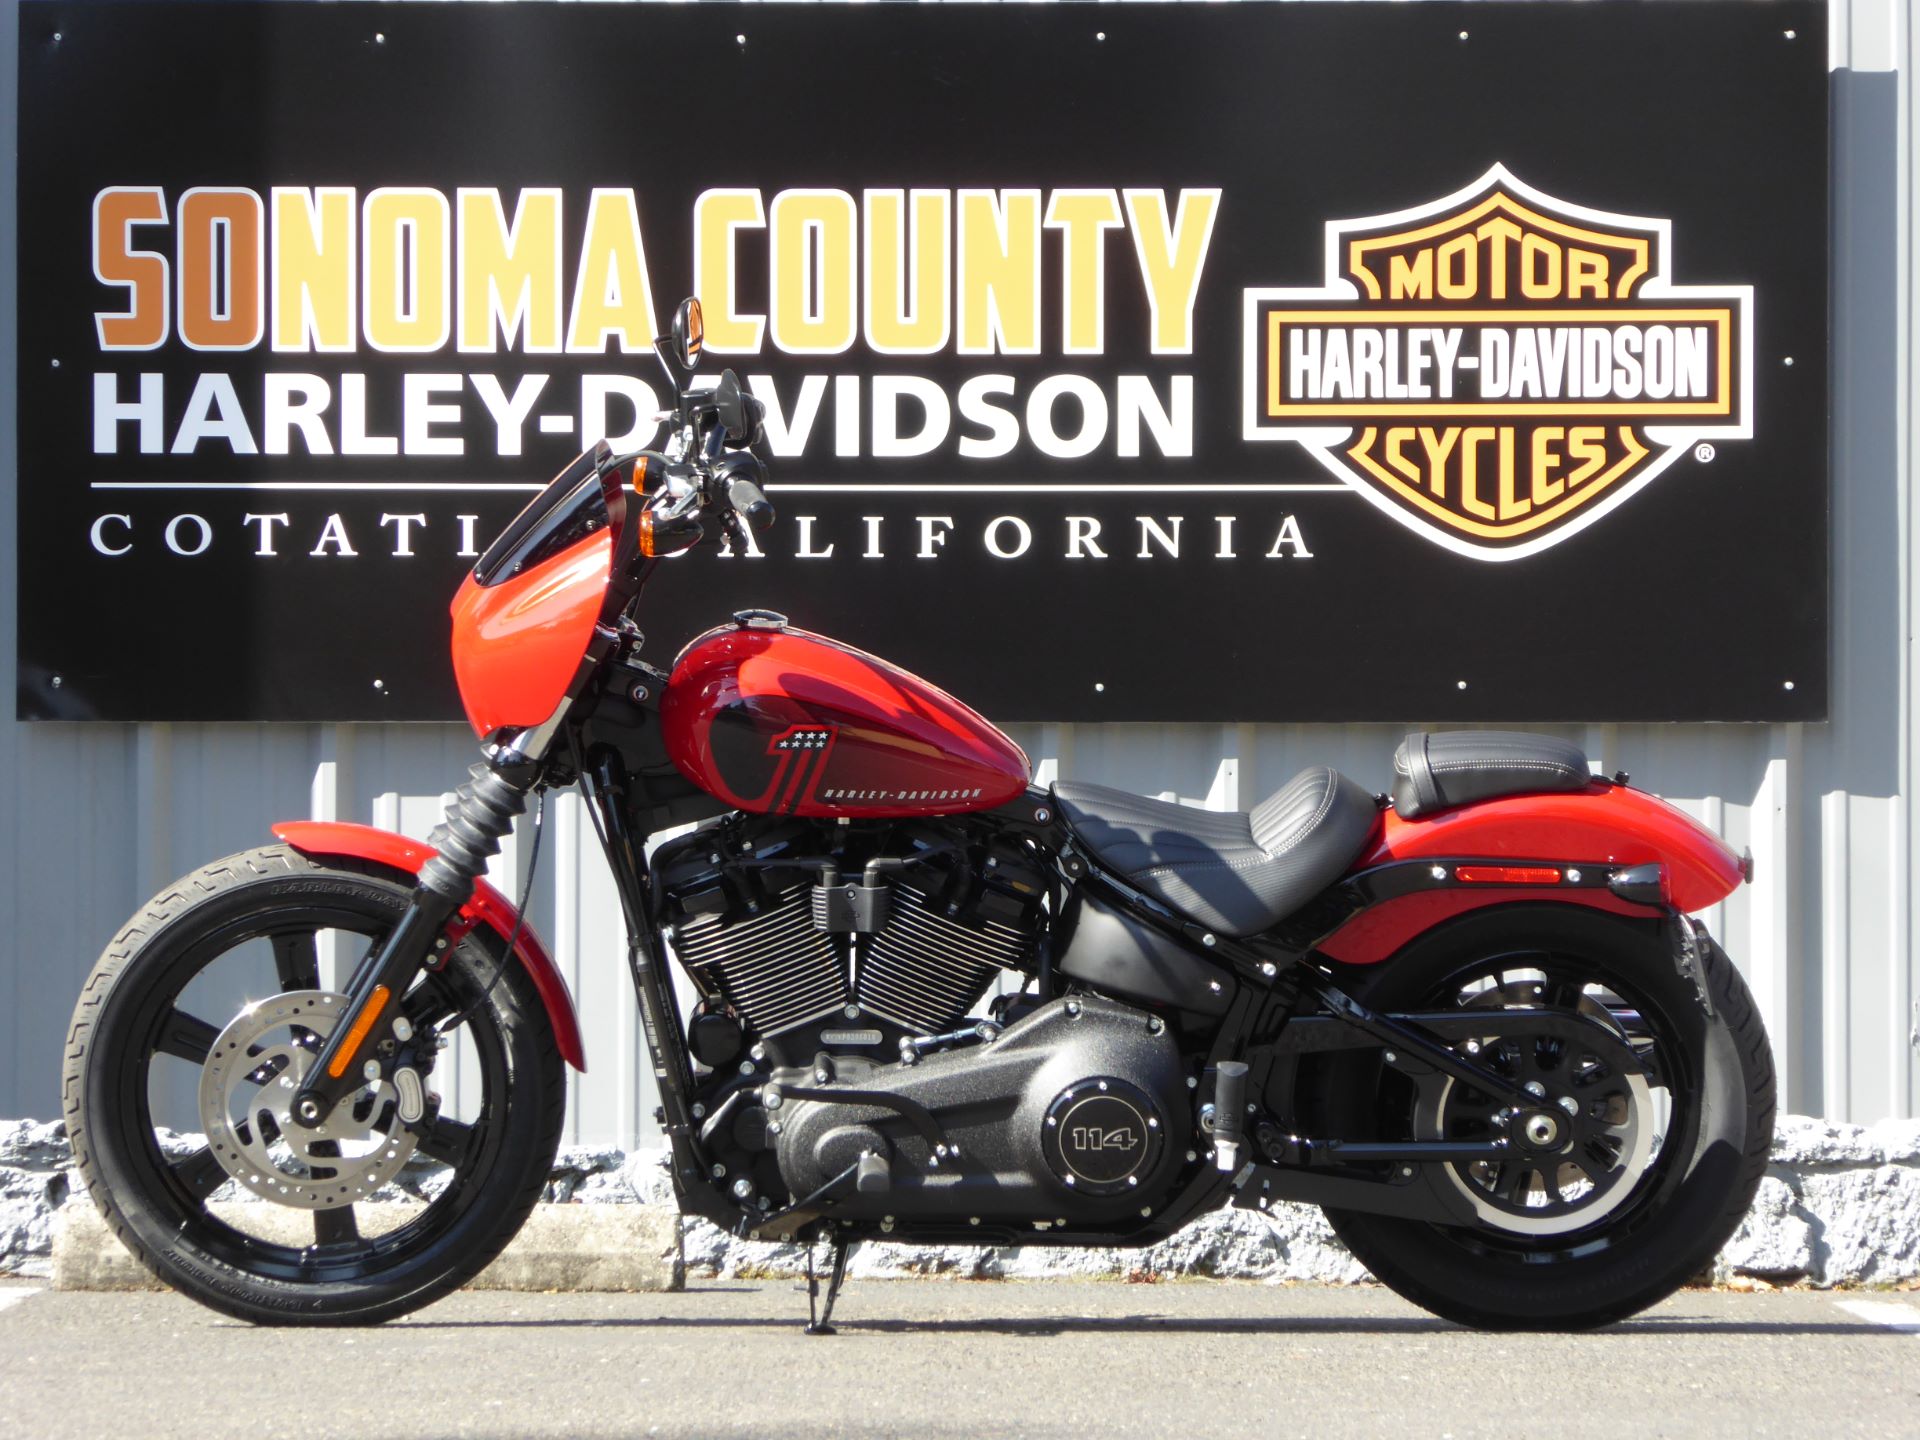 2023 Harley-Davidson Street Bob® 114 in Cotati, California - Photo 3